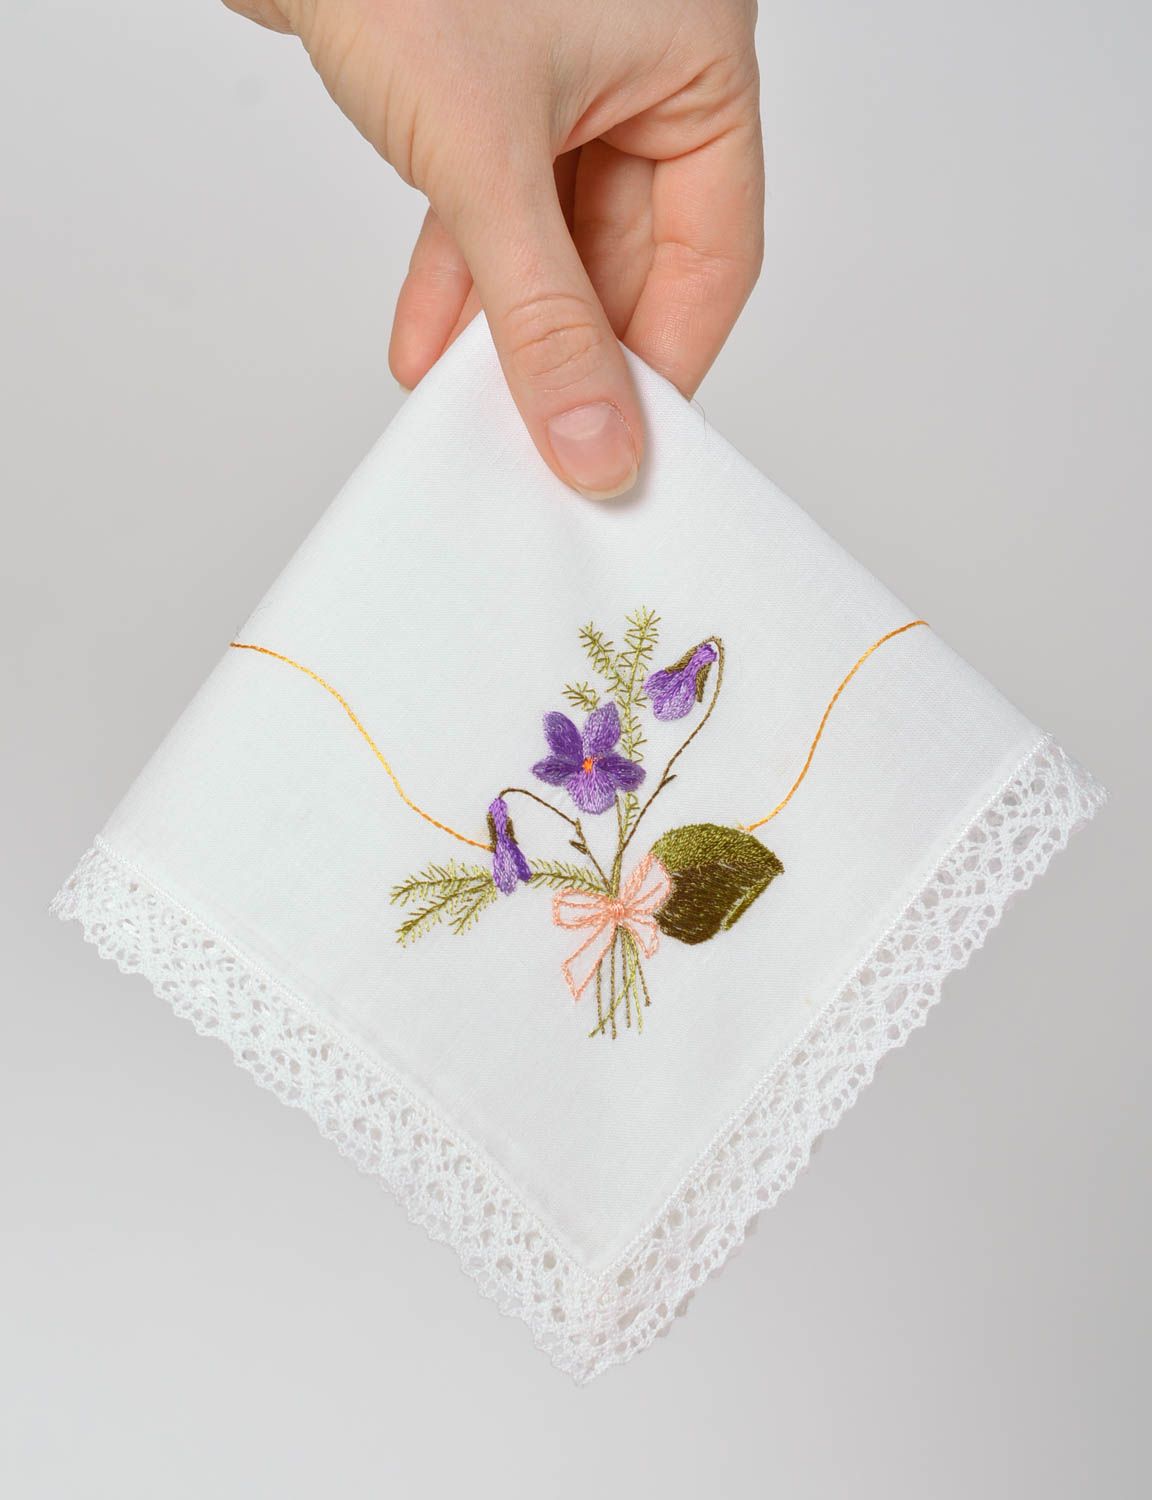 Handmade handkerchief designer handkerchief gift ideas handkerchief for women photo 3